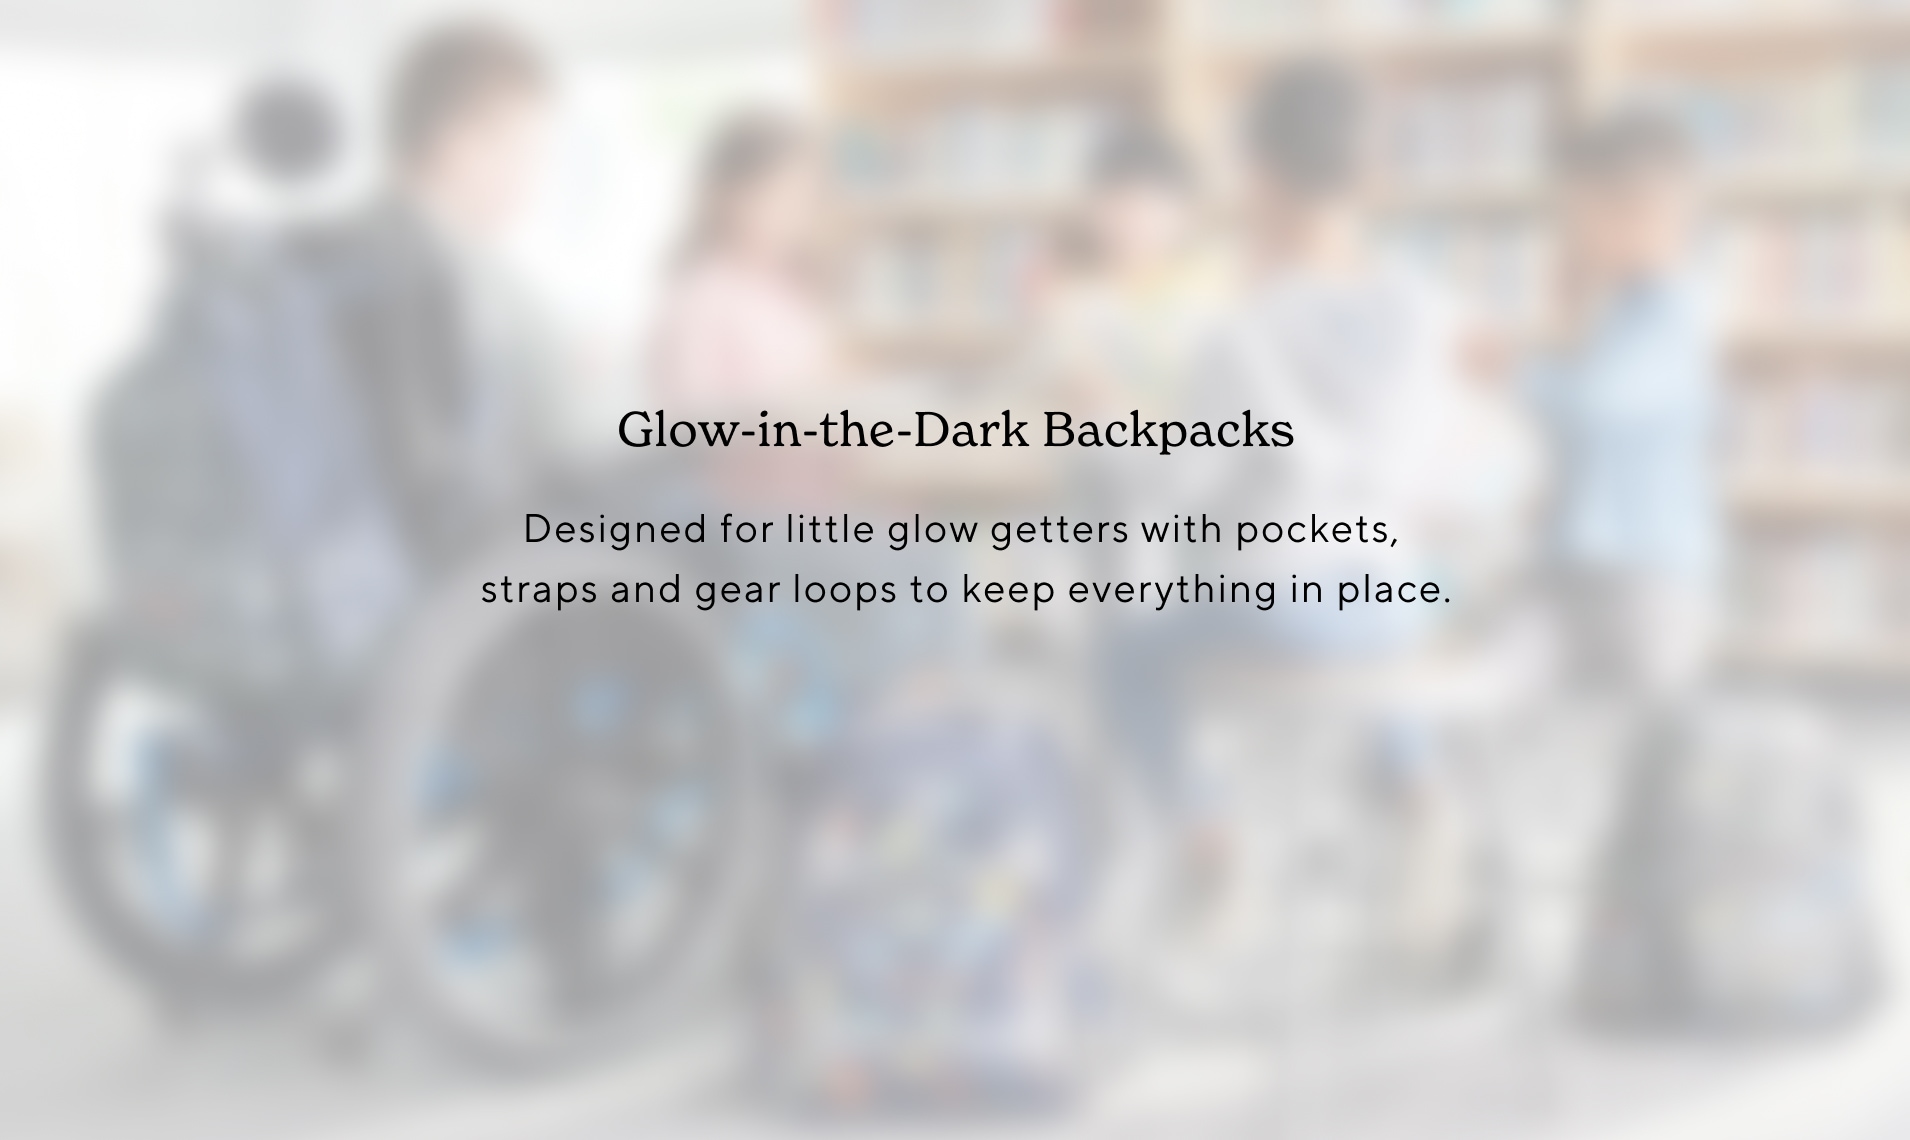 Glow-in-the-Dark Backpacks